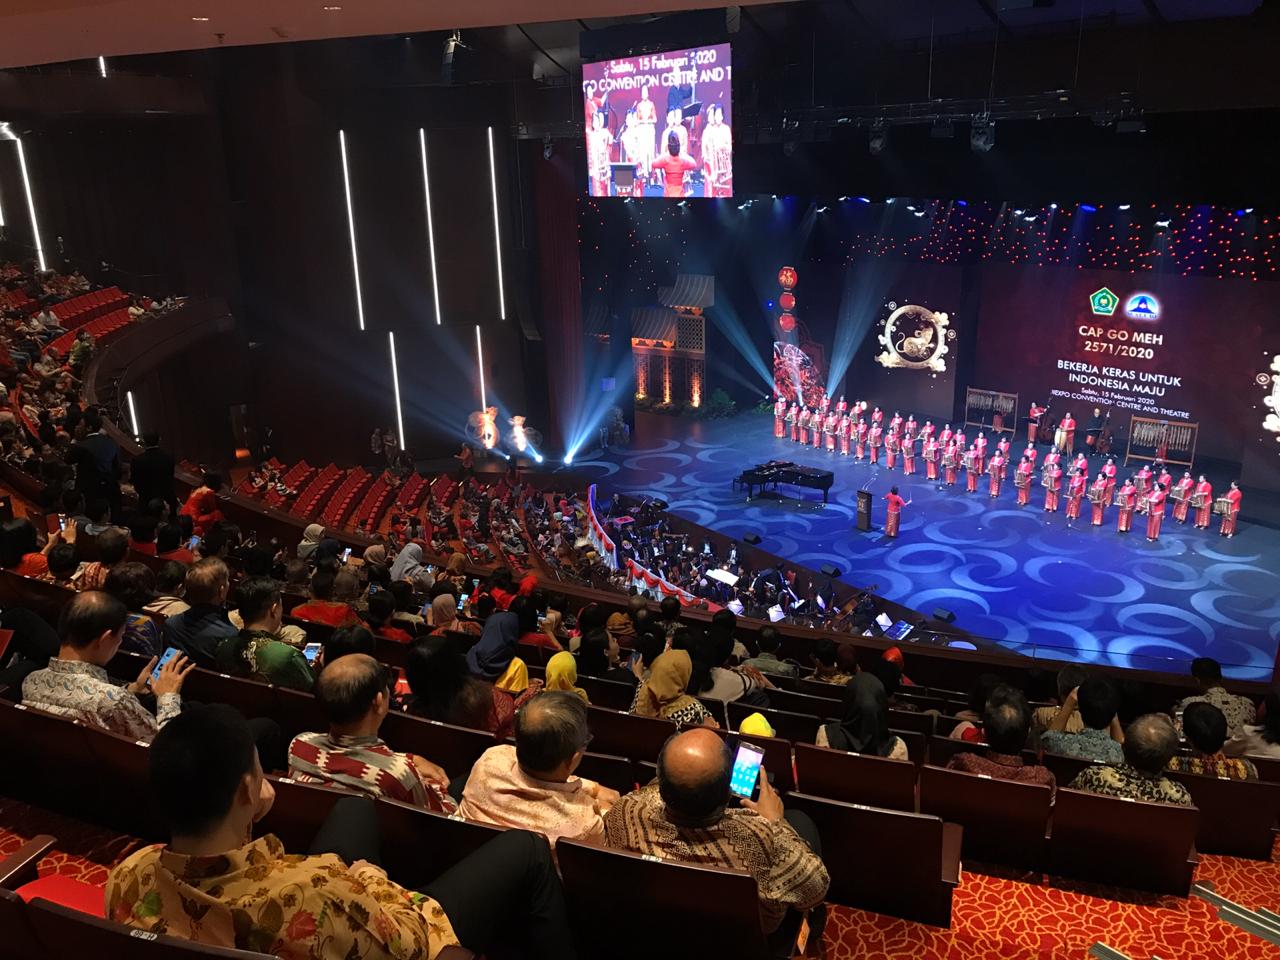 Wah, Perayaan Cap Go Meh di Jakarta Tampilkan Drama Musikal Berkelas